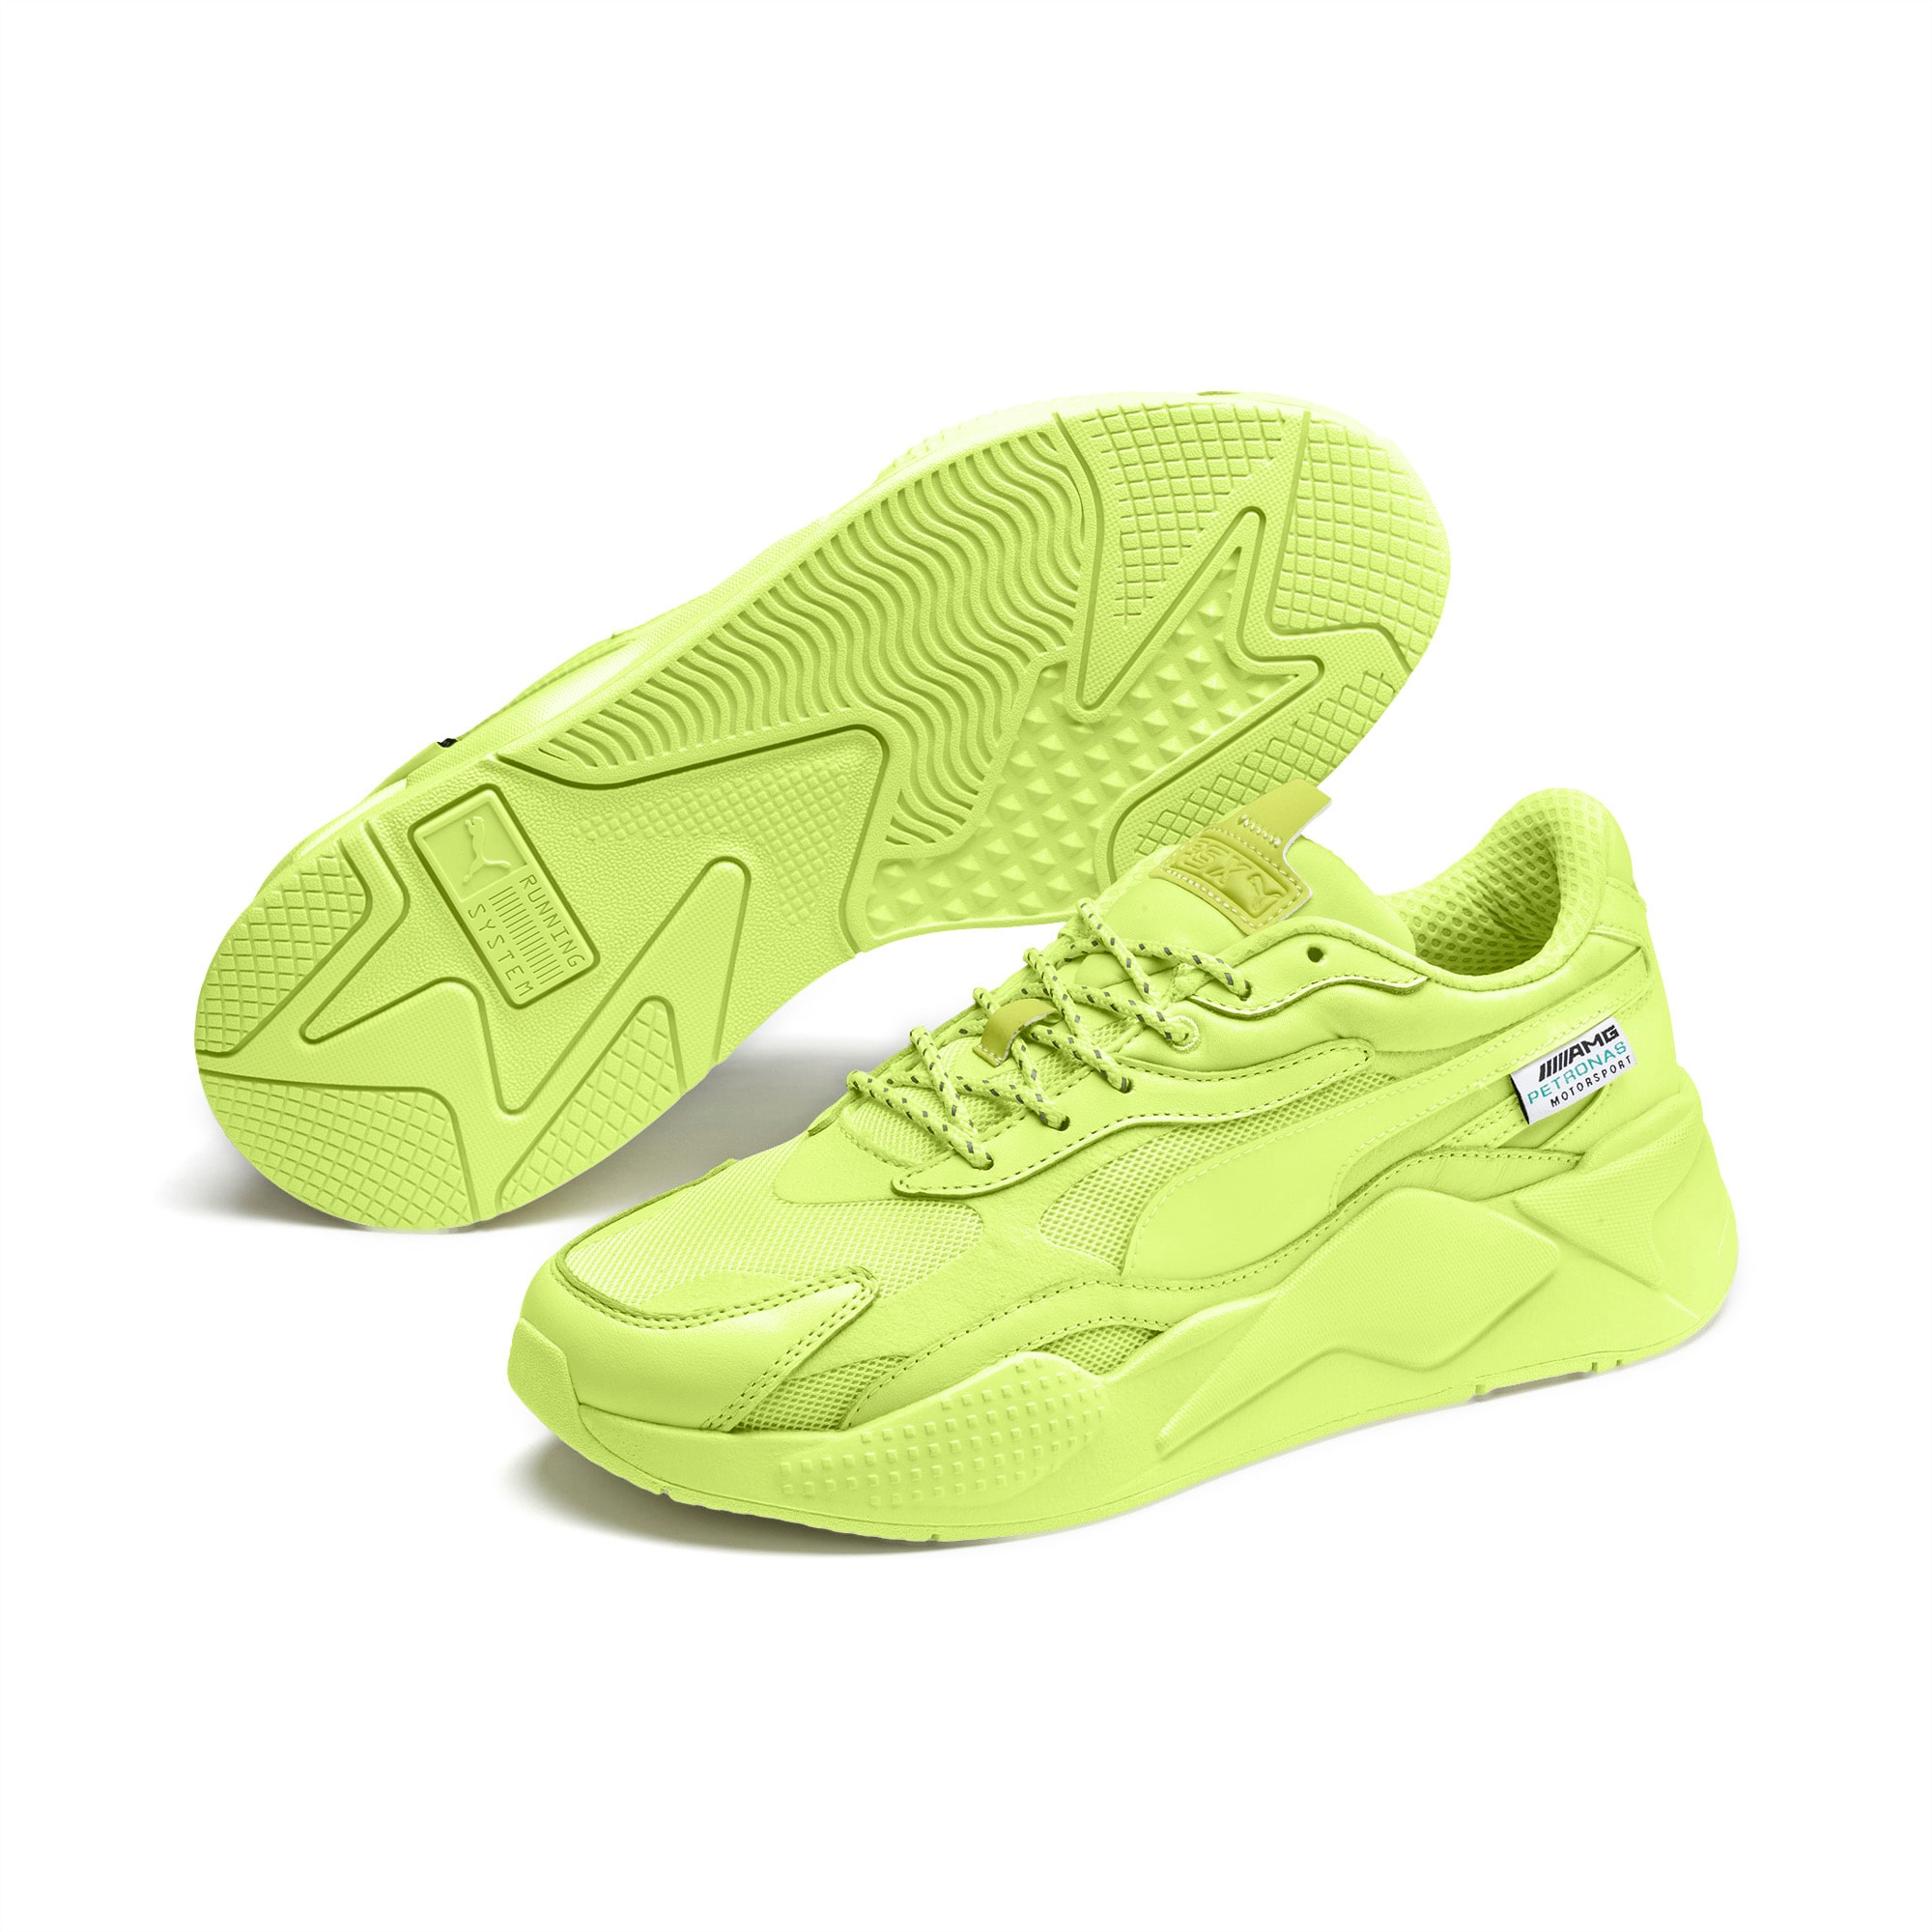 puma shoes lime green